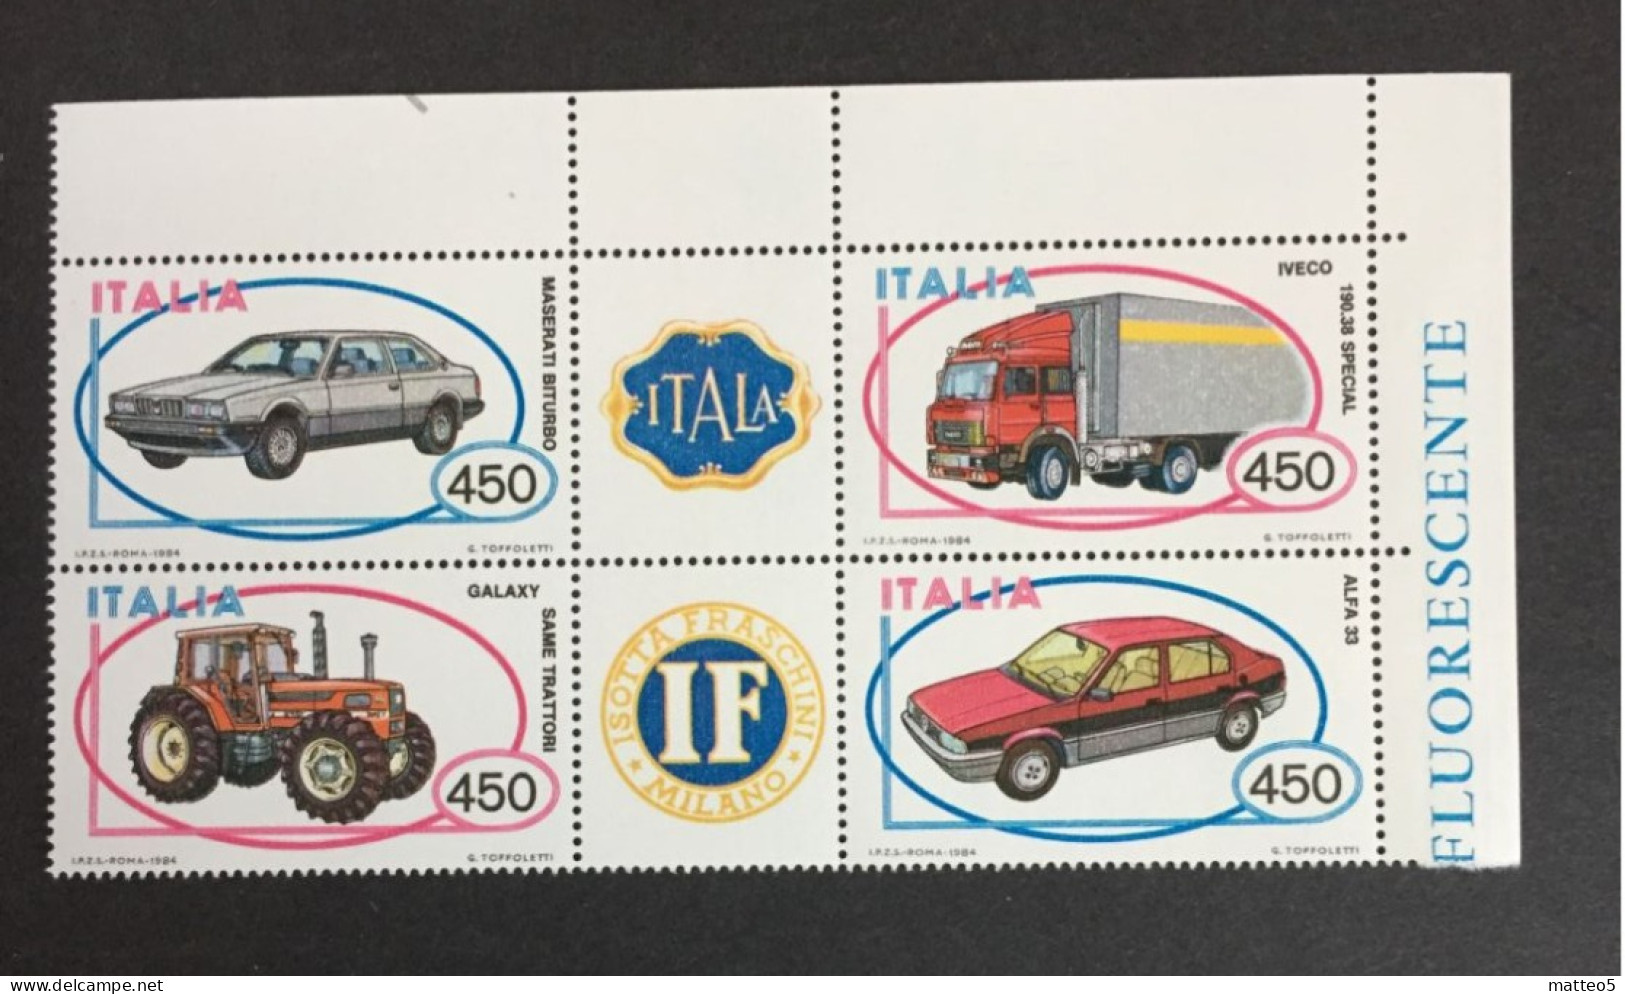 1984 - Italia - Autoveicoli: Maserati Biturbo,Galaxy, Same Trattori, Iveco 190.38 Special, Alfa 33 - - 1981-90: Mint/hinged